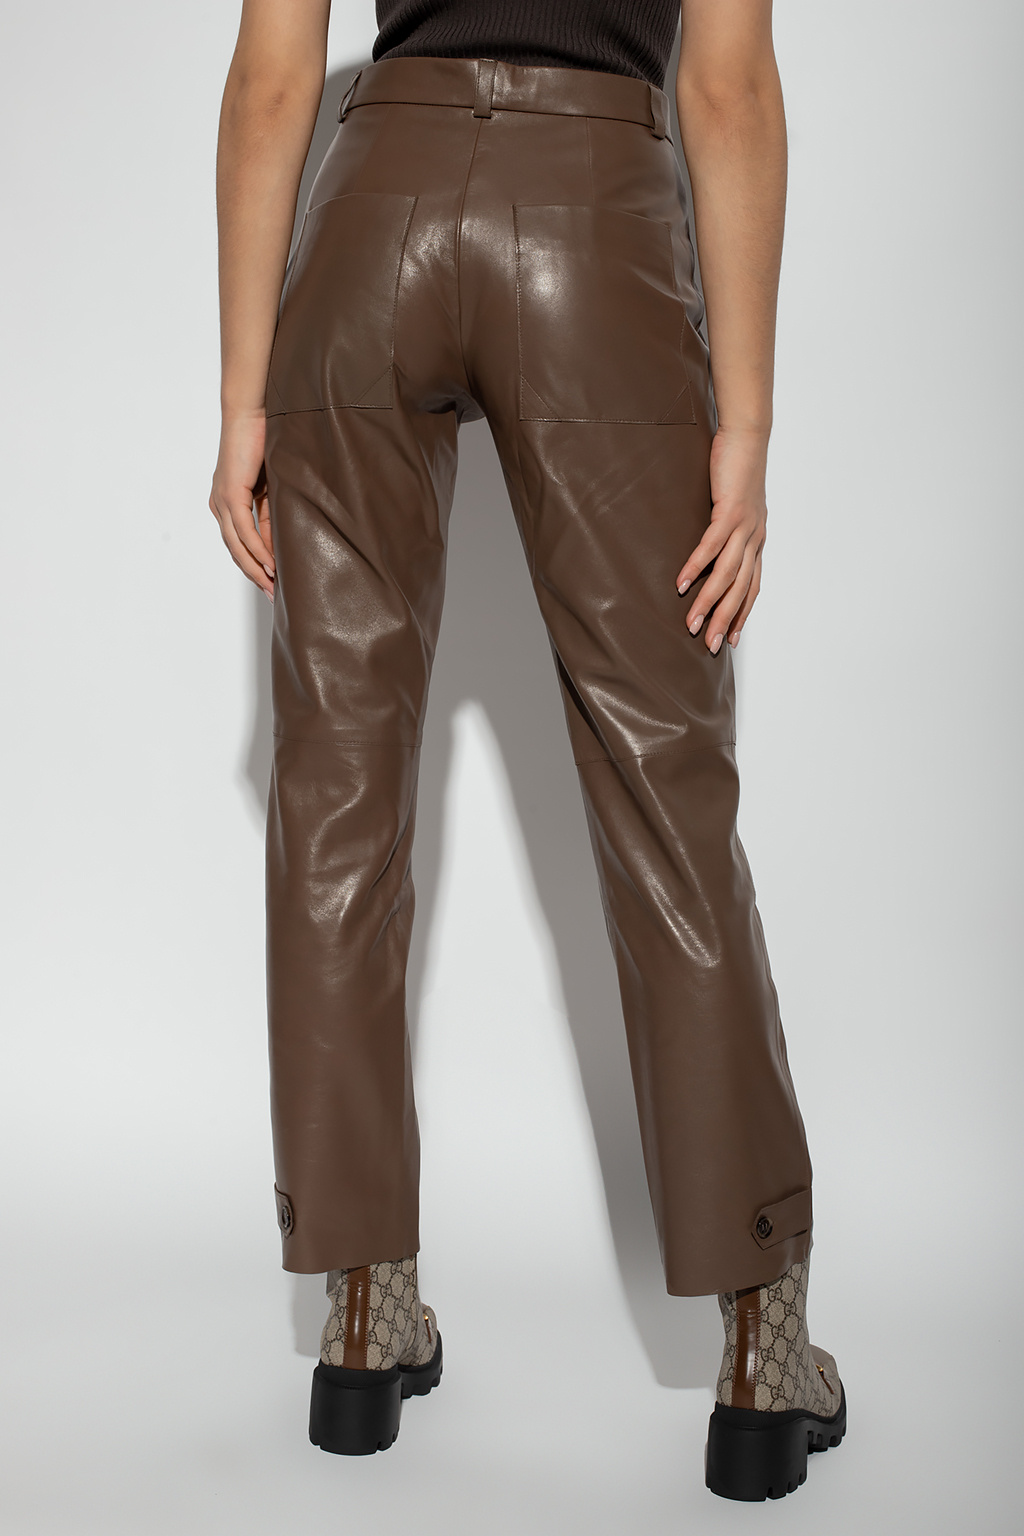 Aeron ‘Alda’ leather trousers